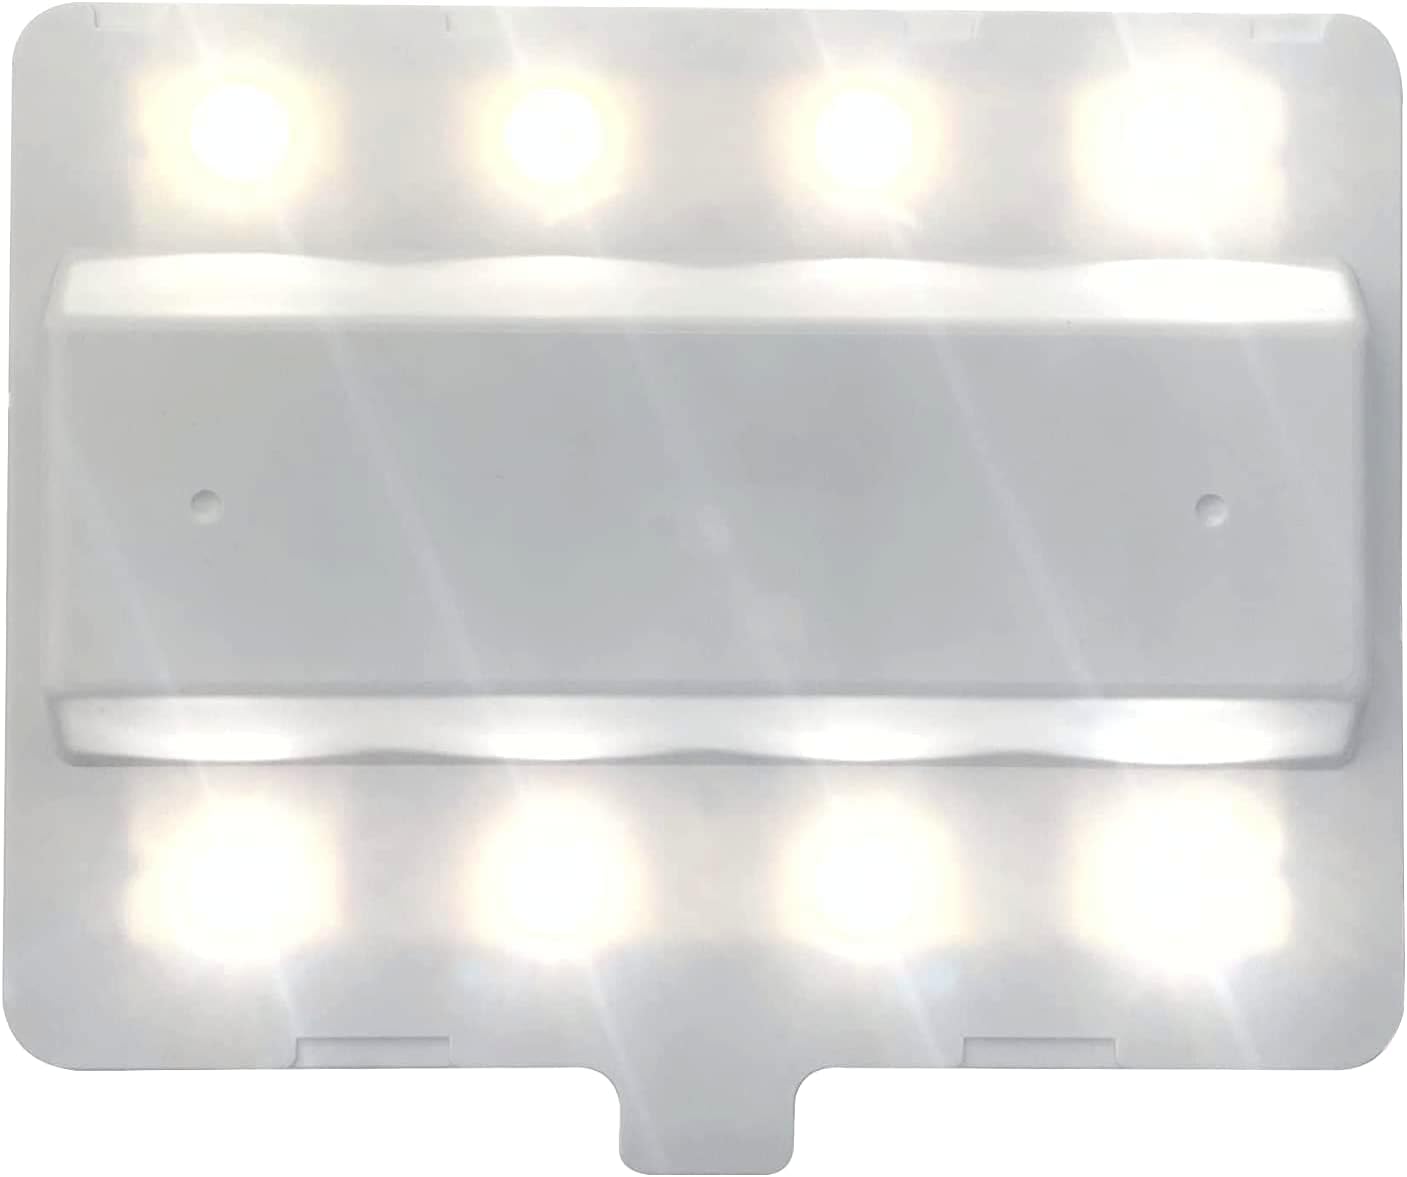 Supco RLB11738 Refrigerator LED Light Bulb replaces 5304511738